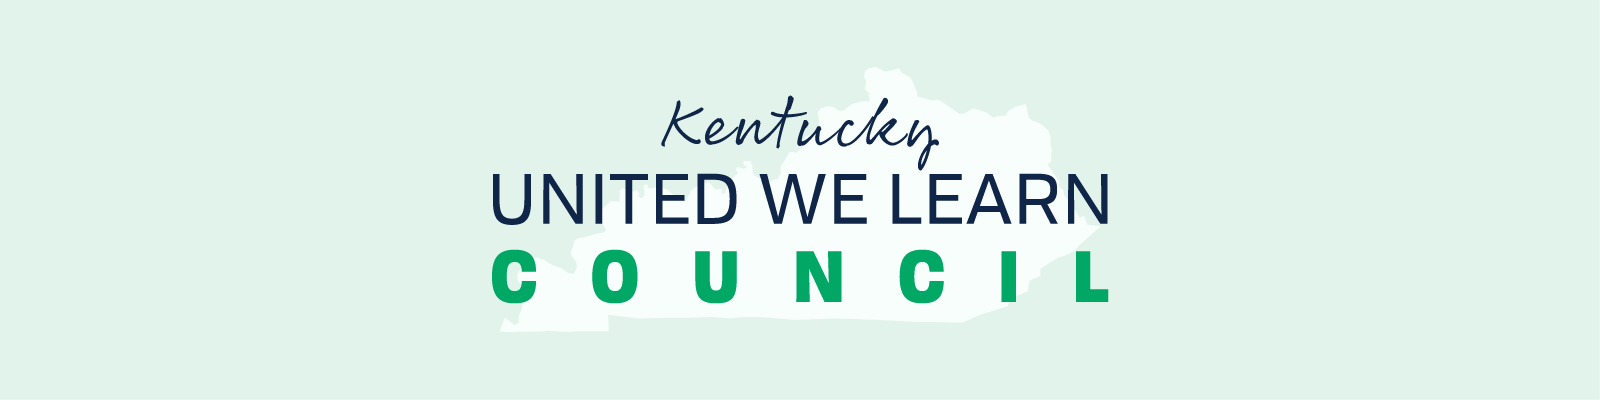 Kentucky United We Learn Council Header